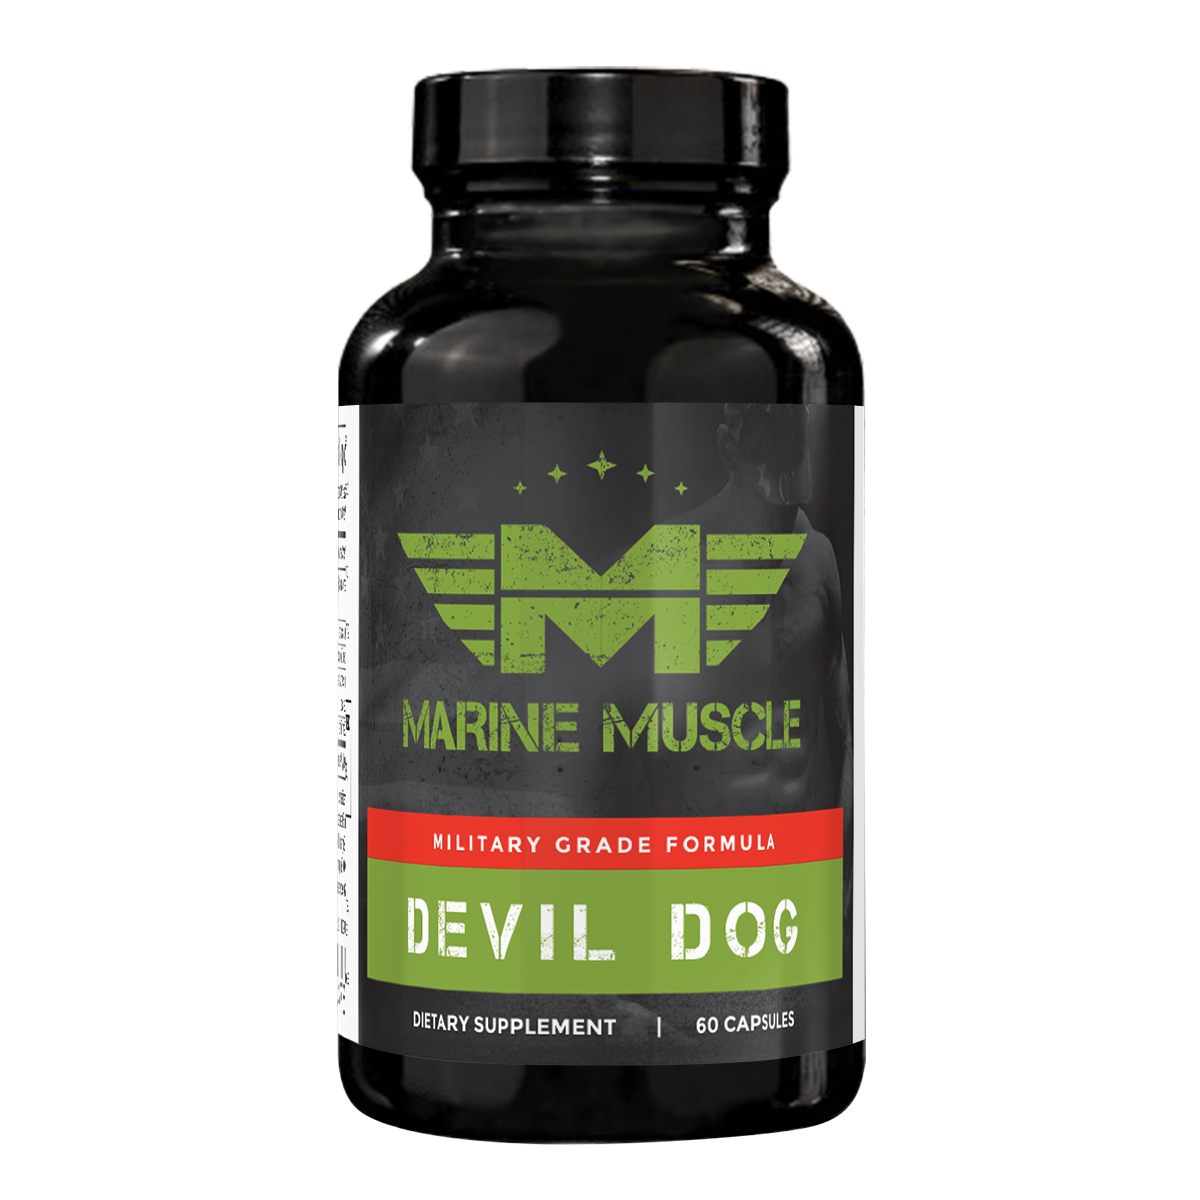 Marine Muscle Devildog Review